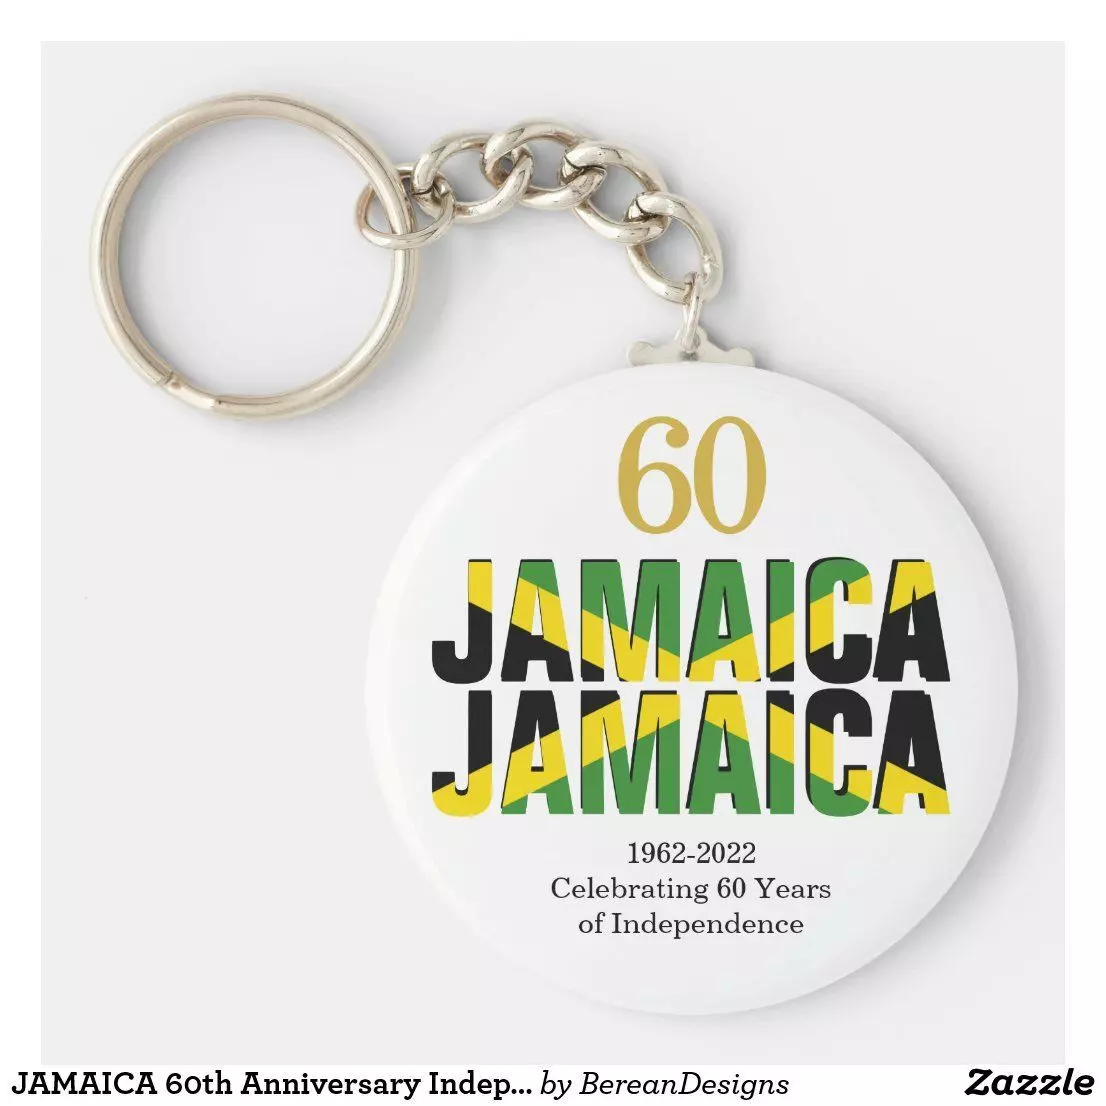 Jamaica@60: Jamaica pledges to deepen ties with Nigeria